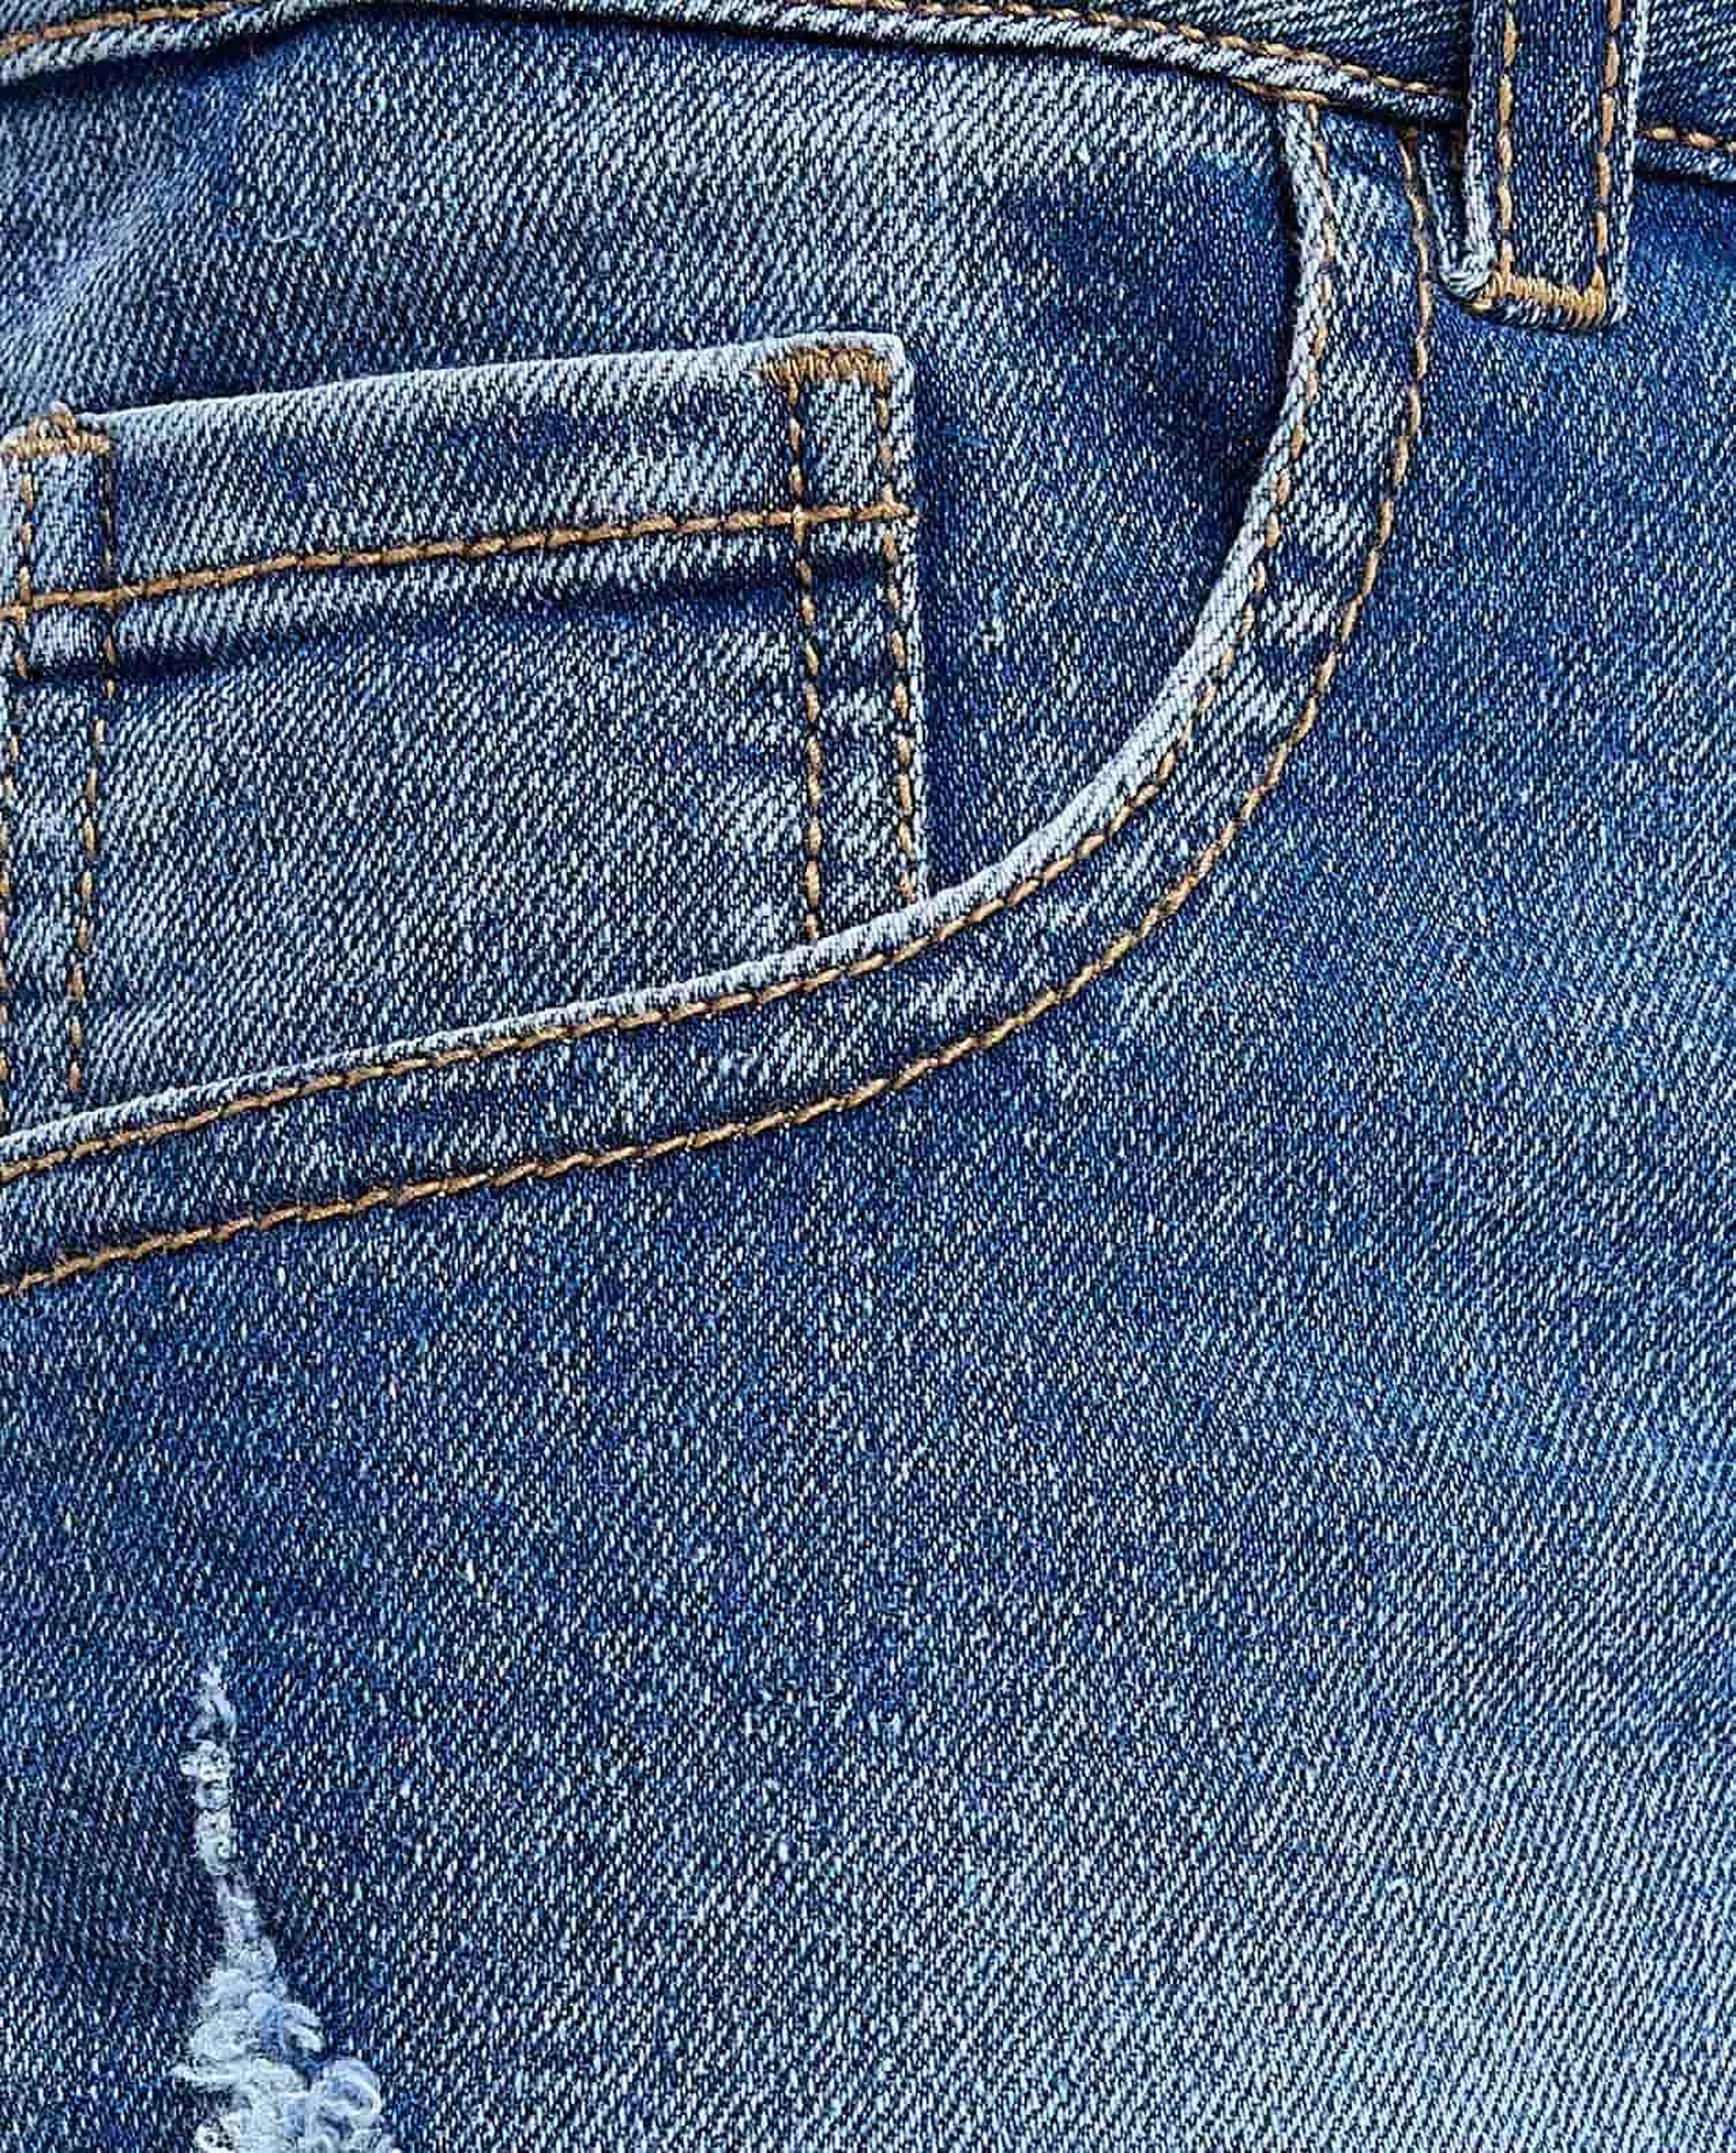 Lace Detail Denim Shorts with Button Closure